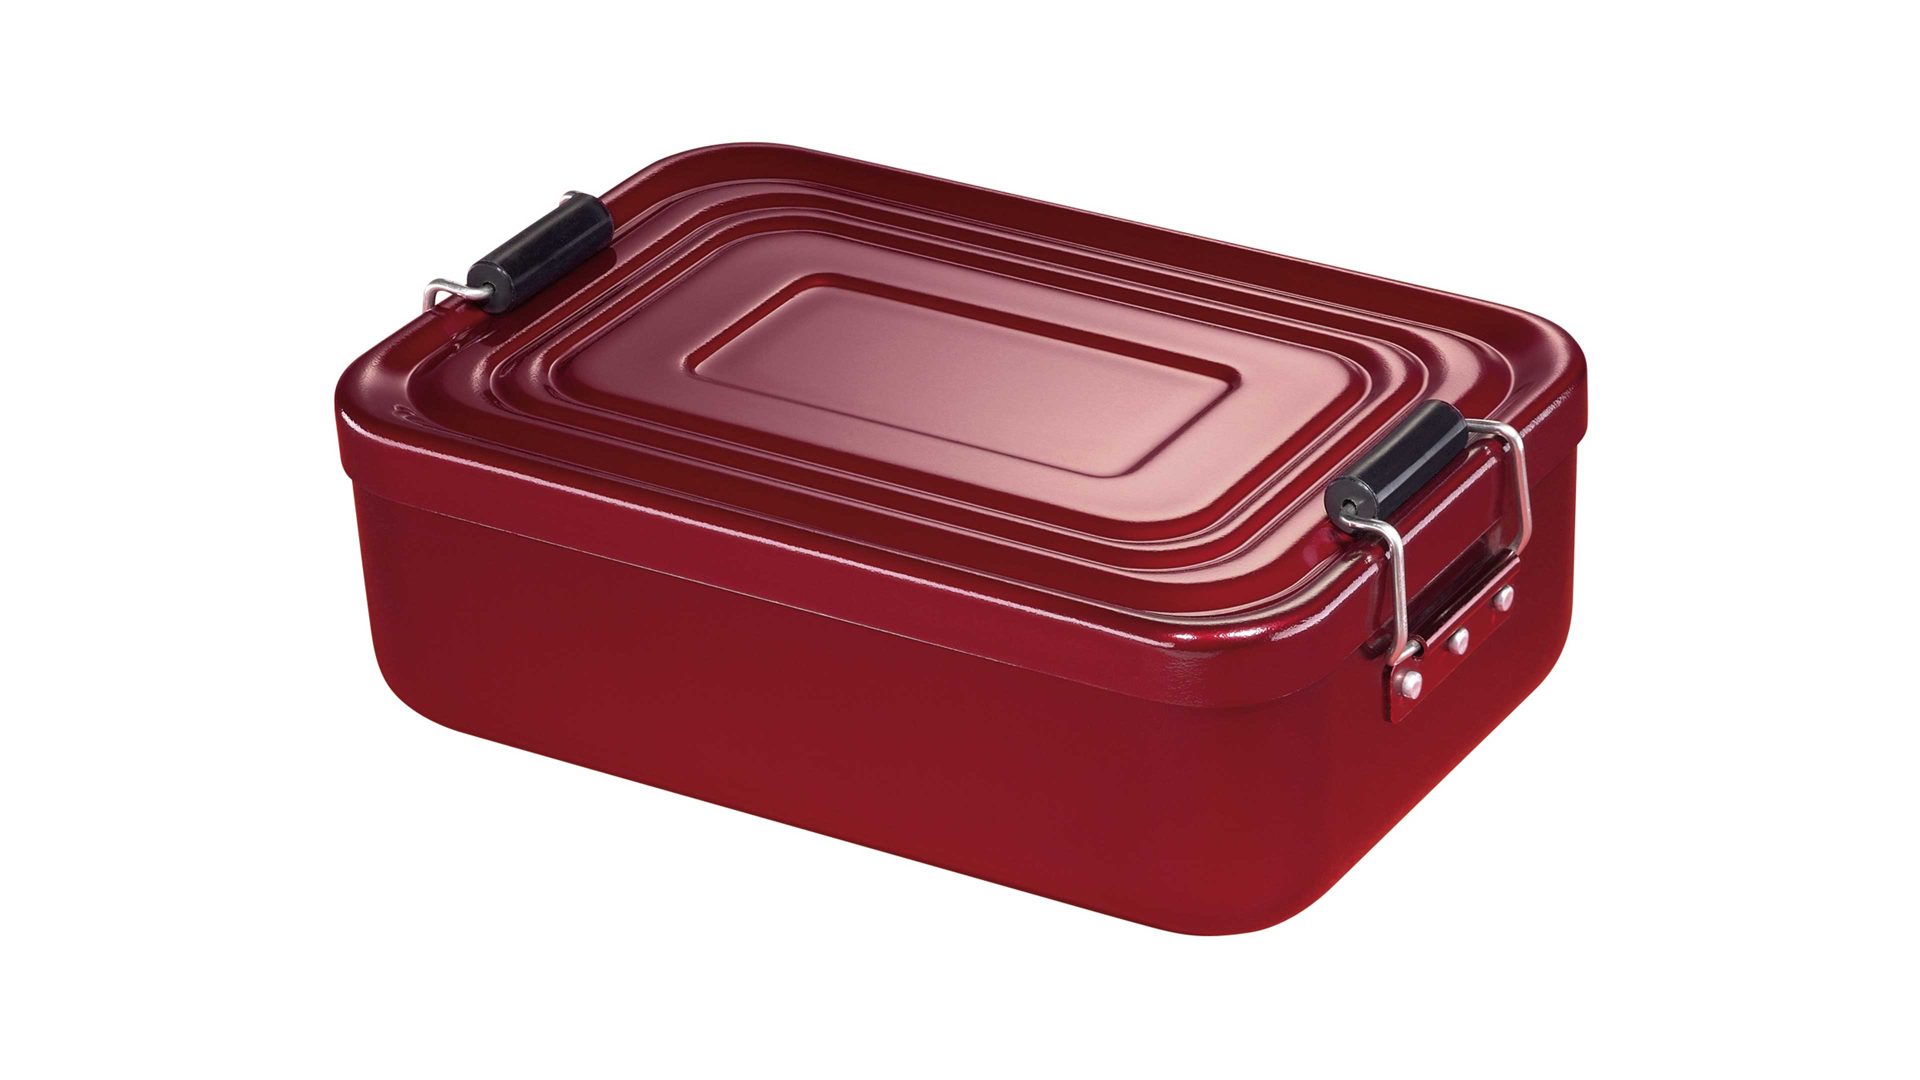 Dose Küchenprofi aus Metall in Dunkelrot KÜCHENPROFI Lunch Box rotes Aluminium – ca. 18 x 12 cm